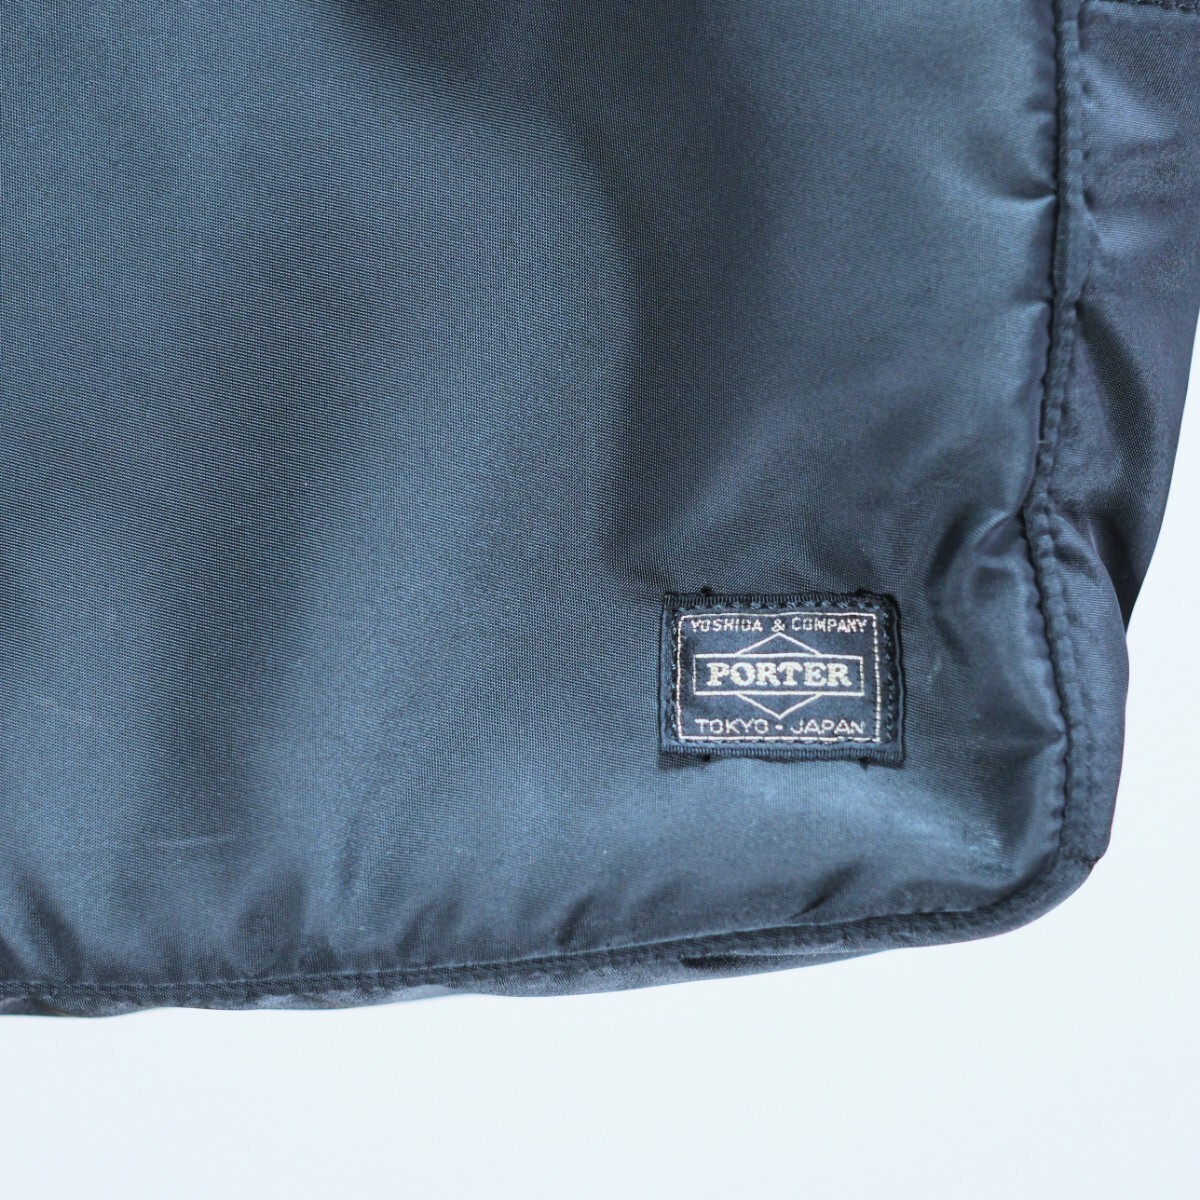 PORTER CREAM tote bag black ( Porter / cream / Yoshida bag / nylon tsu il / black / used / men's / lady's / tongue car manner / travel / commuting )